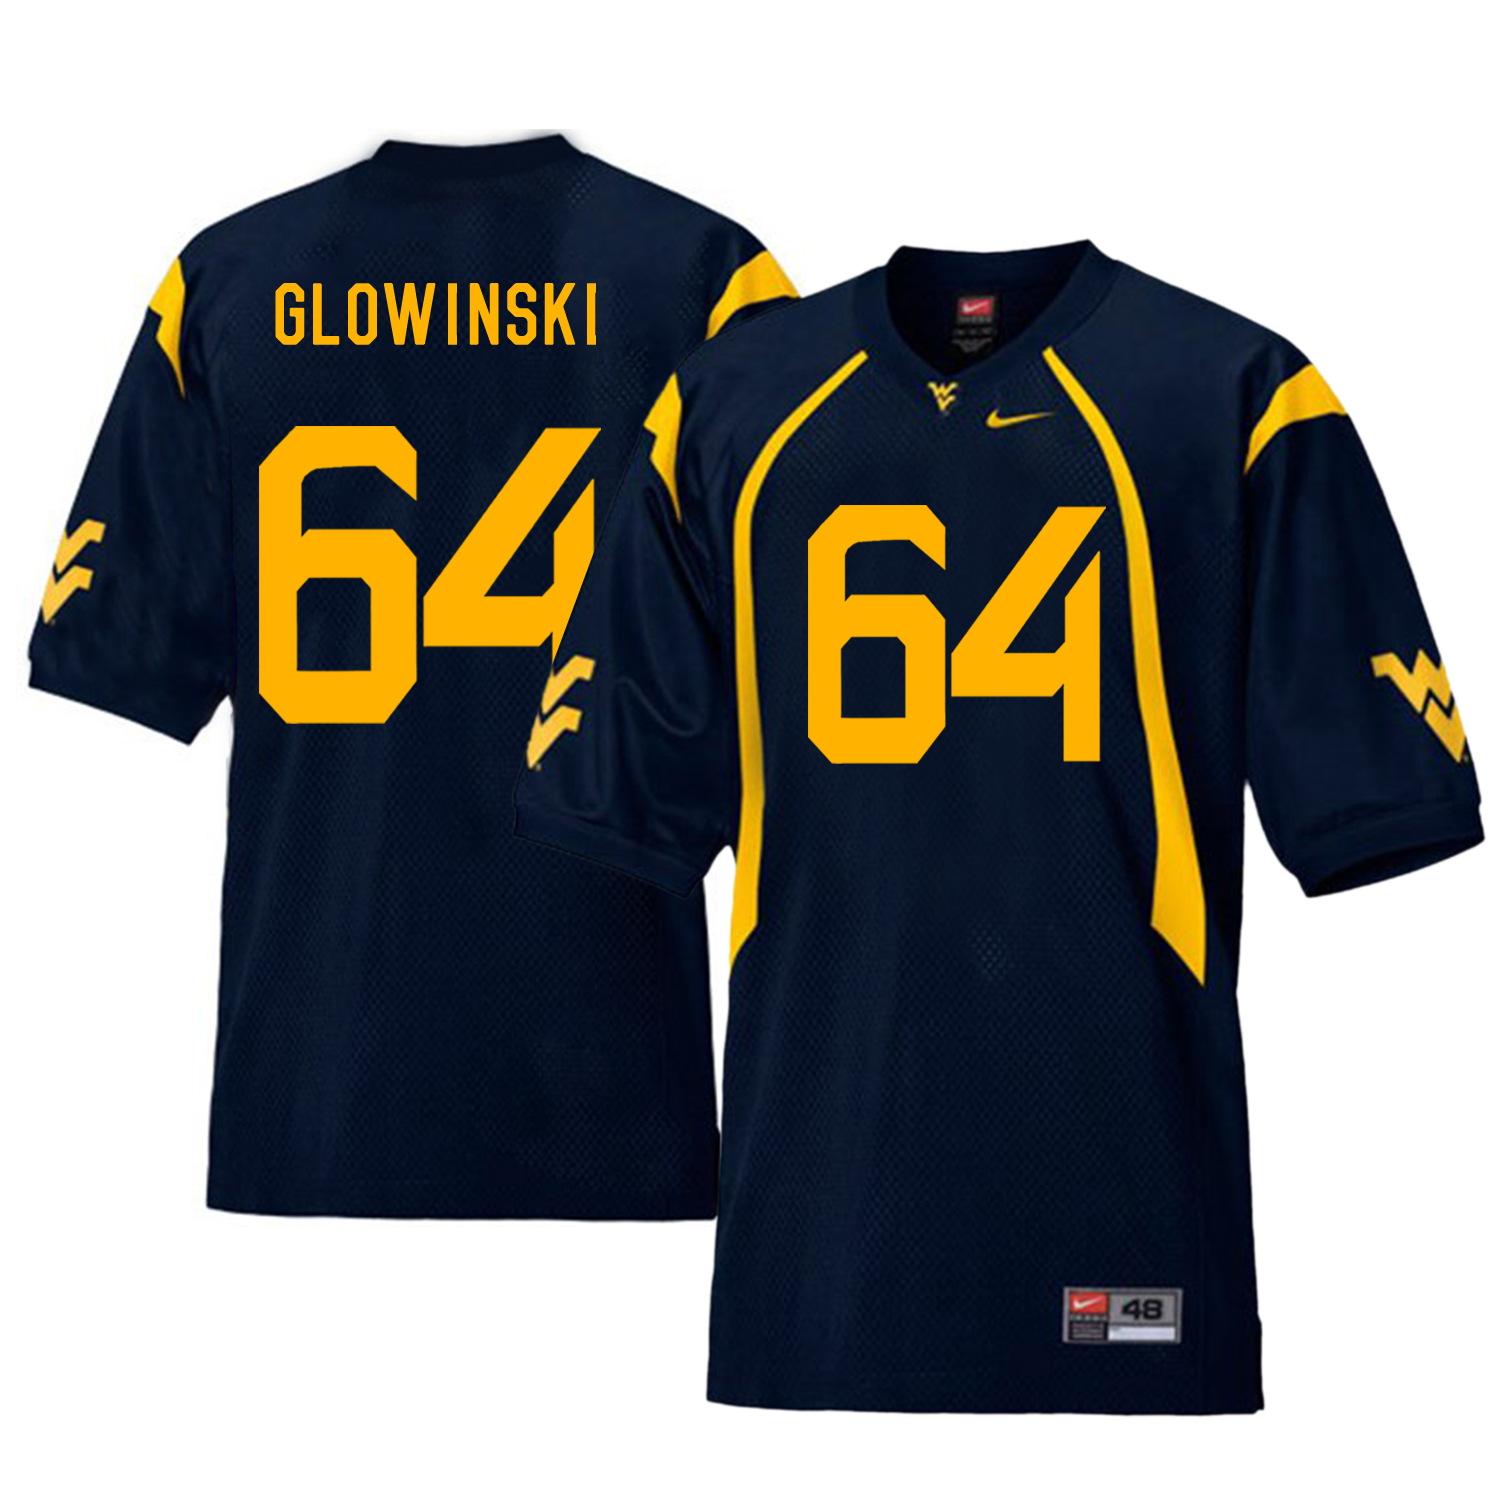 West Virginia Mountaineers 64 Mark Glowinski Navy College Football Jersey